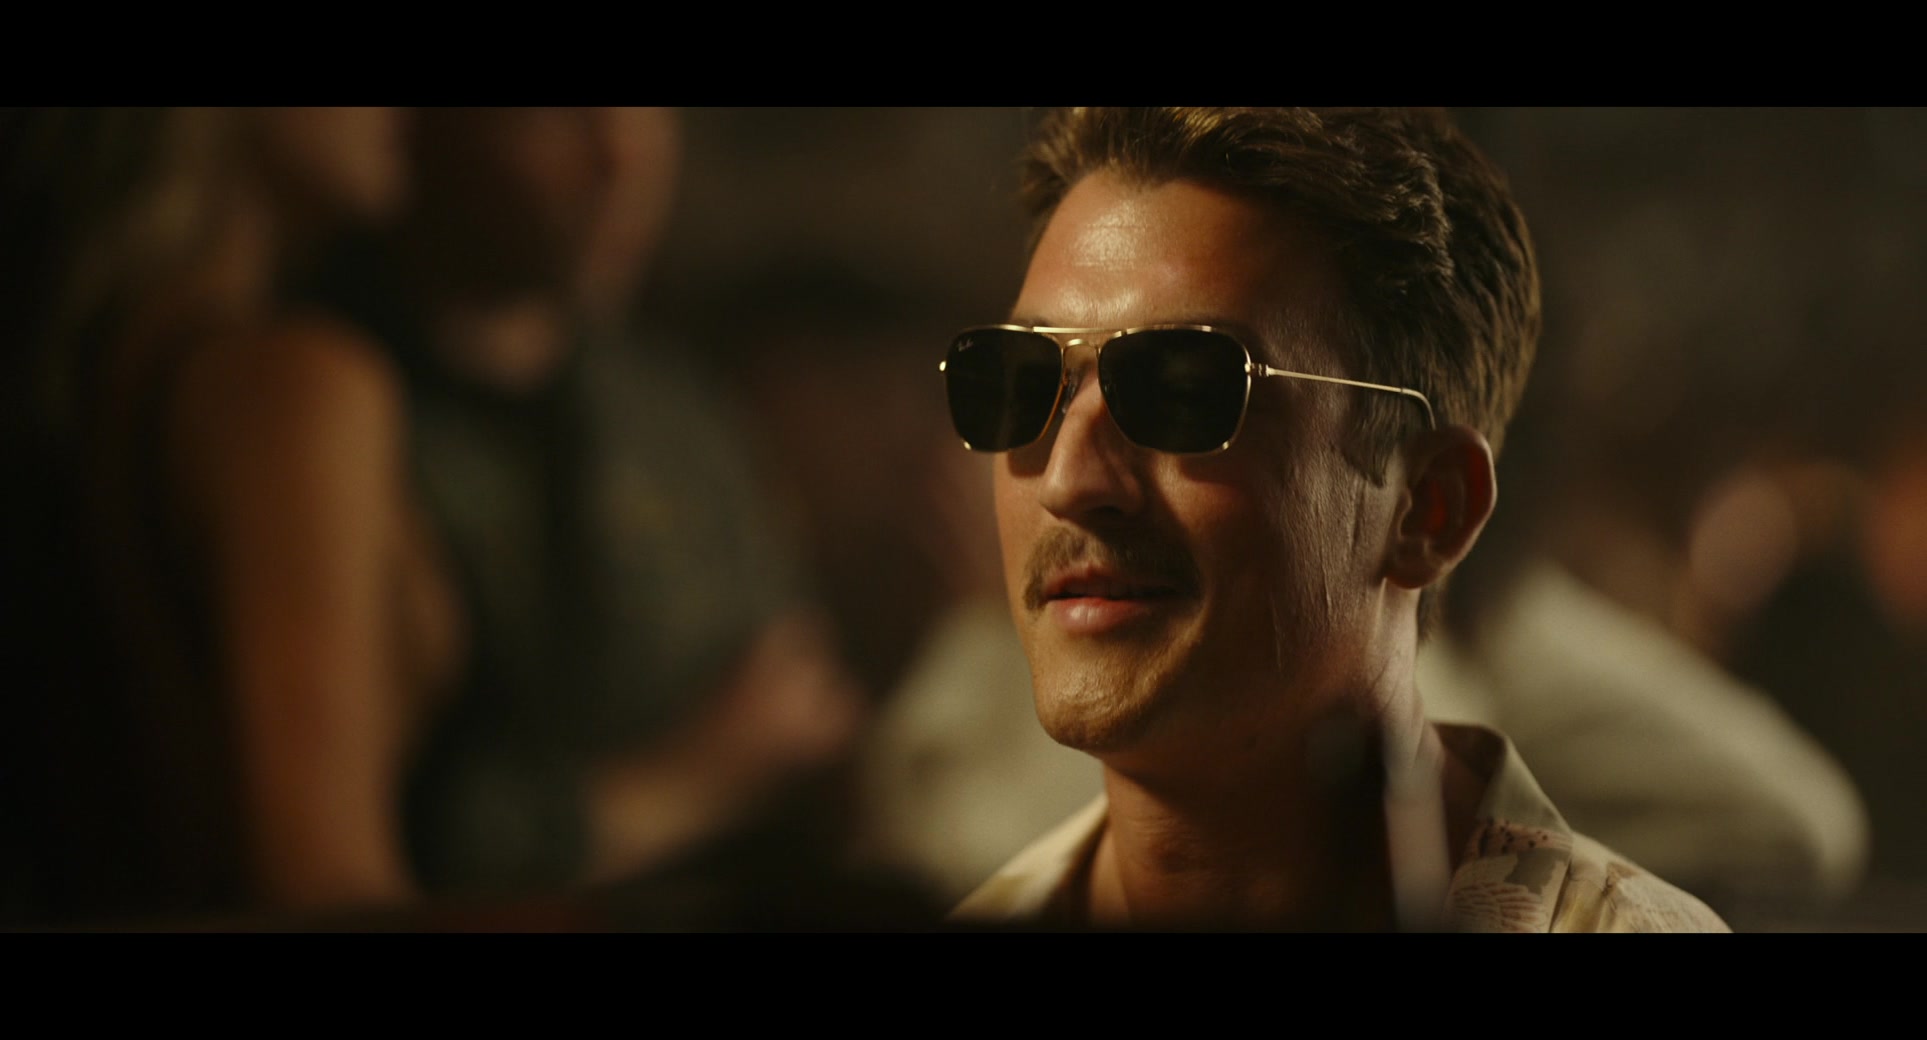 Ray-Ban Men's Sunglasses Of Miles Teller As LT Bradley 'Rooster' Bradshaw  In Top Gun: Maverick (2022)